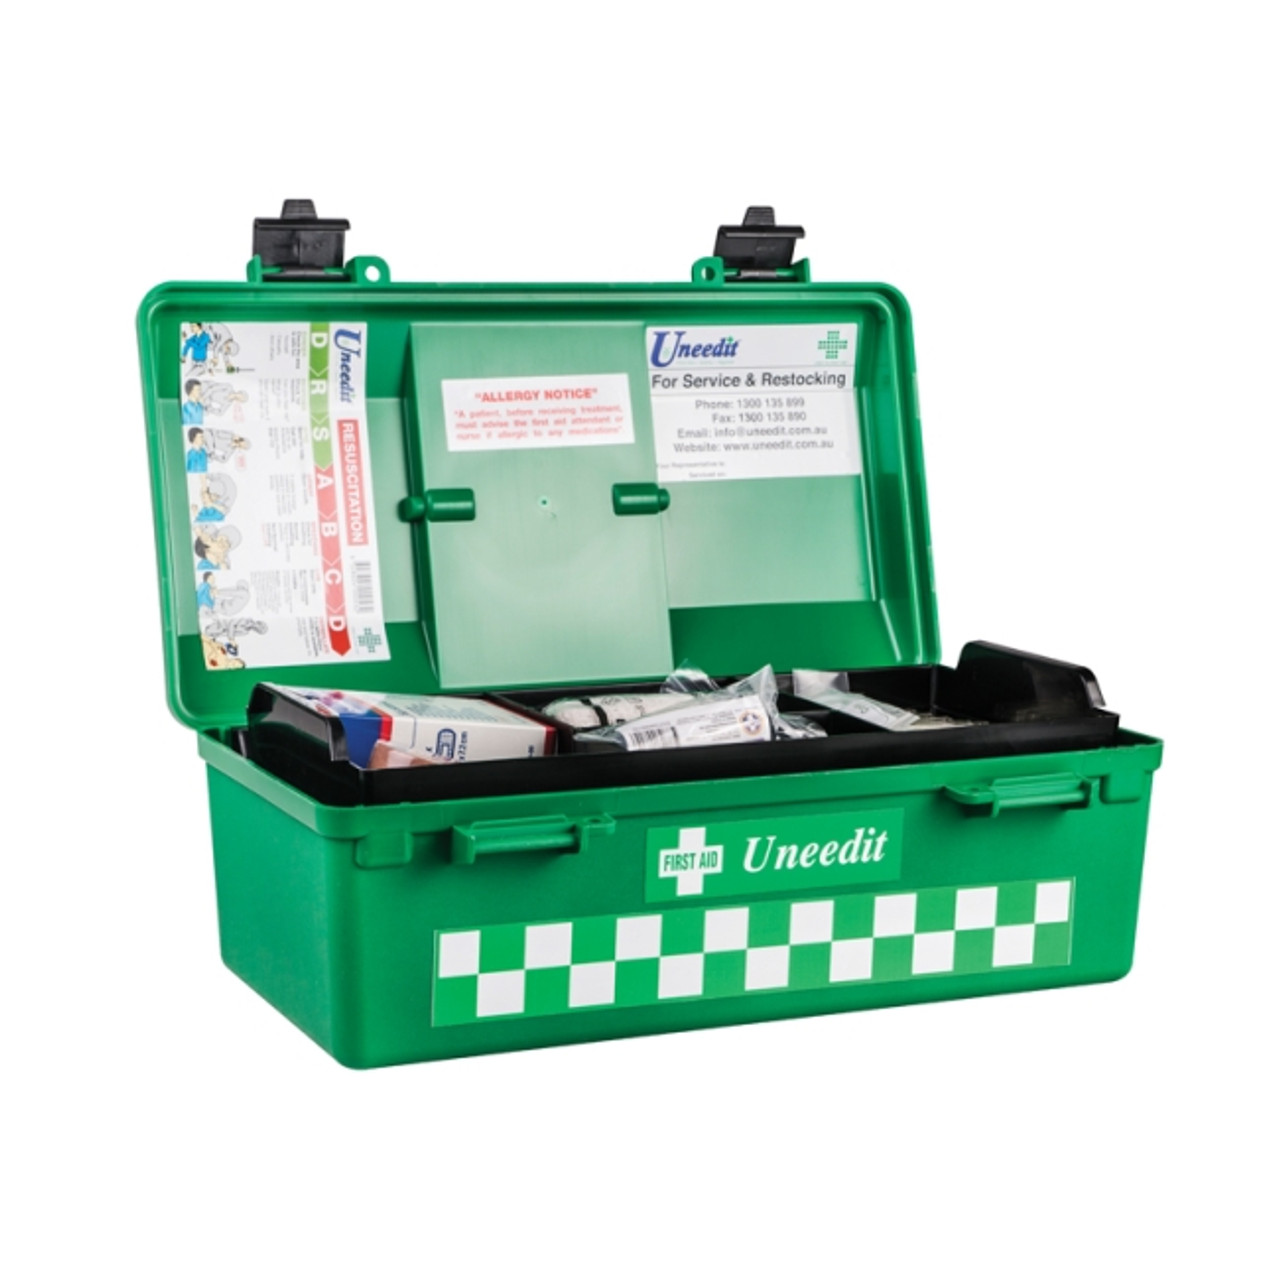 BioFast First Aid Kit Tackle Box